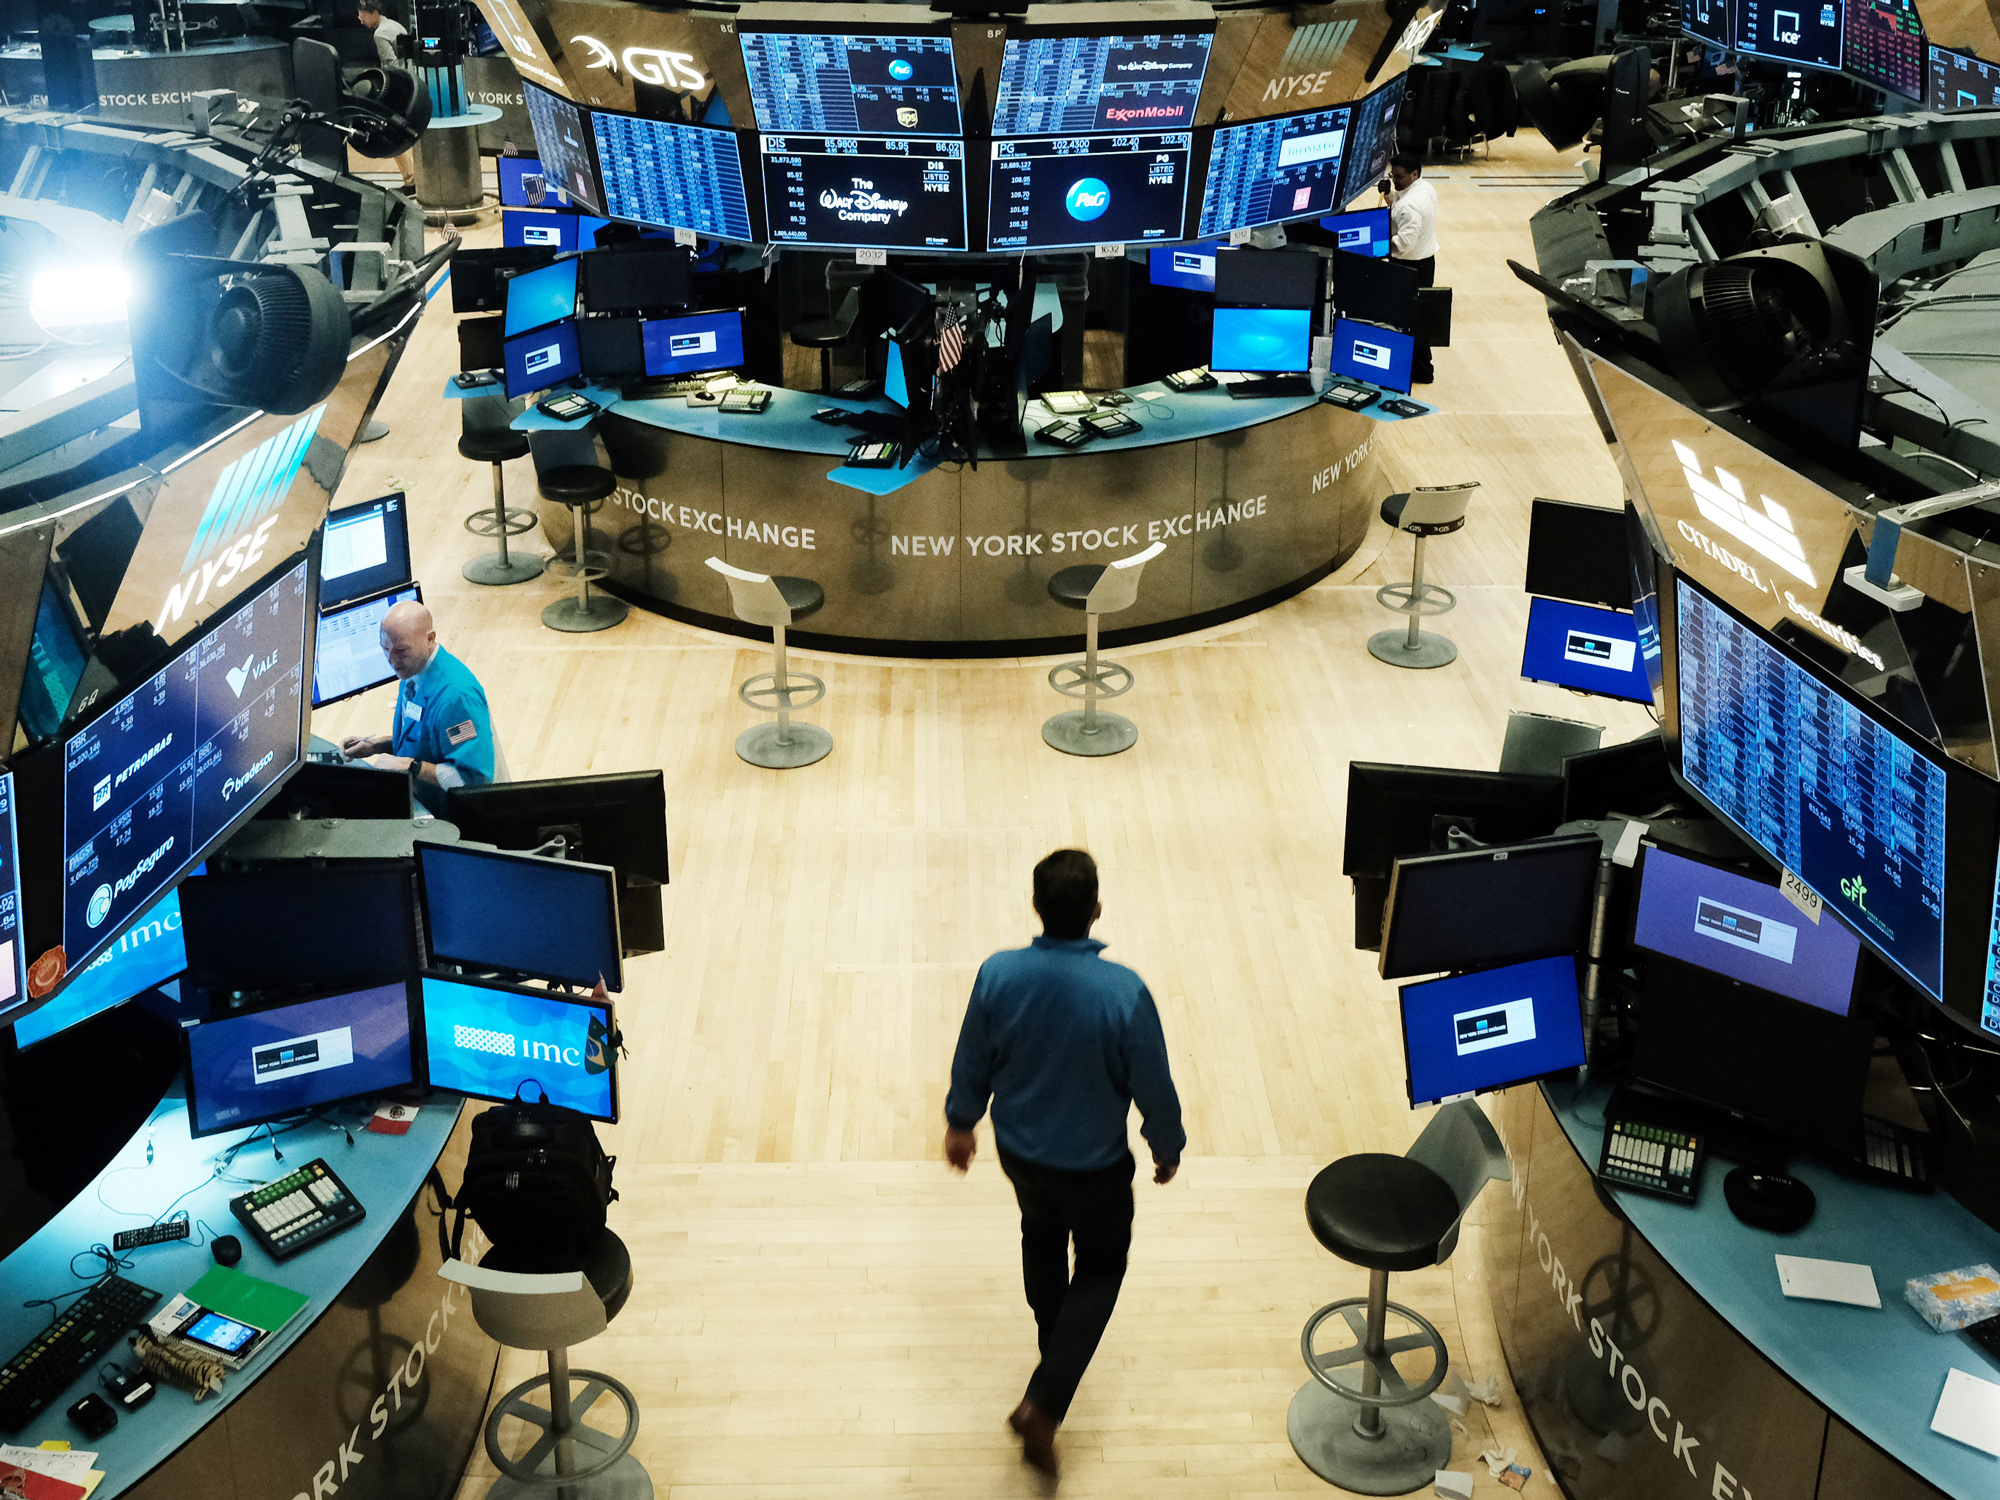 NYSE Closes Trading Floor, Moves To Fully Electronic Trading Amid Coronavirus Pandemic